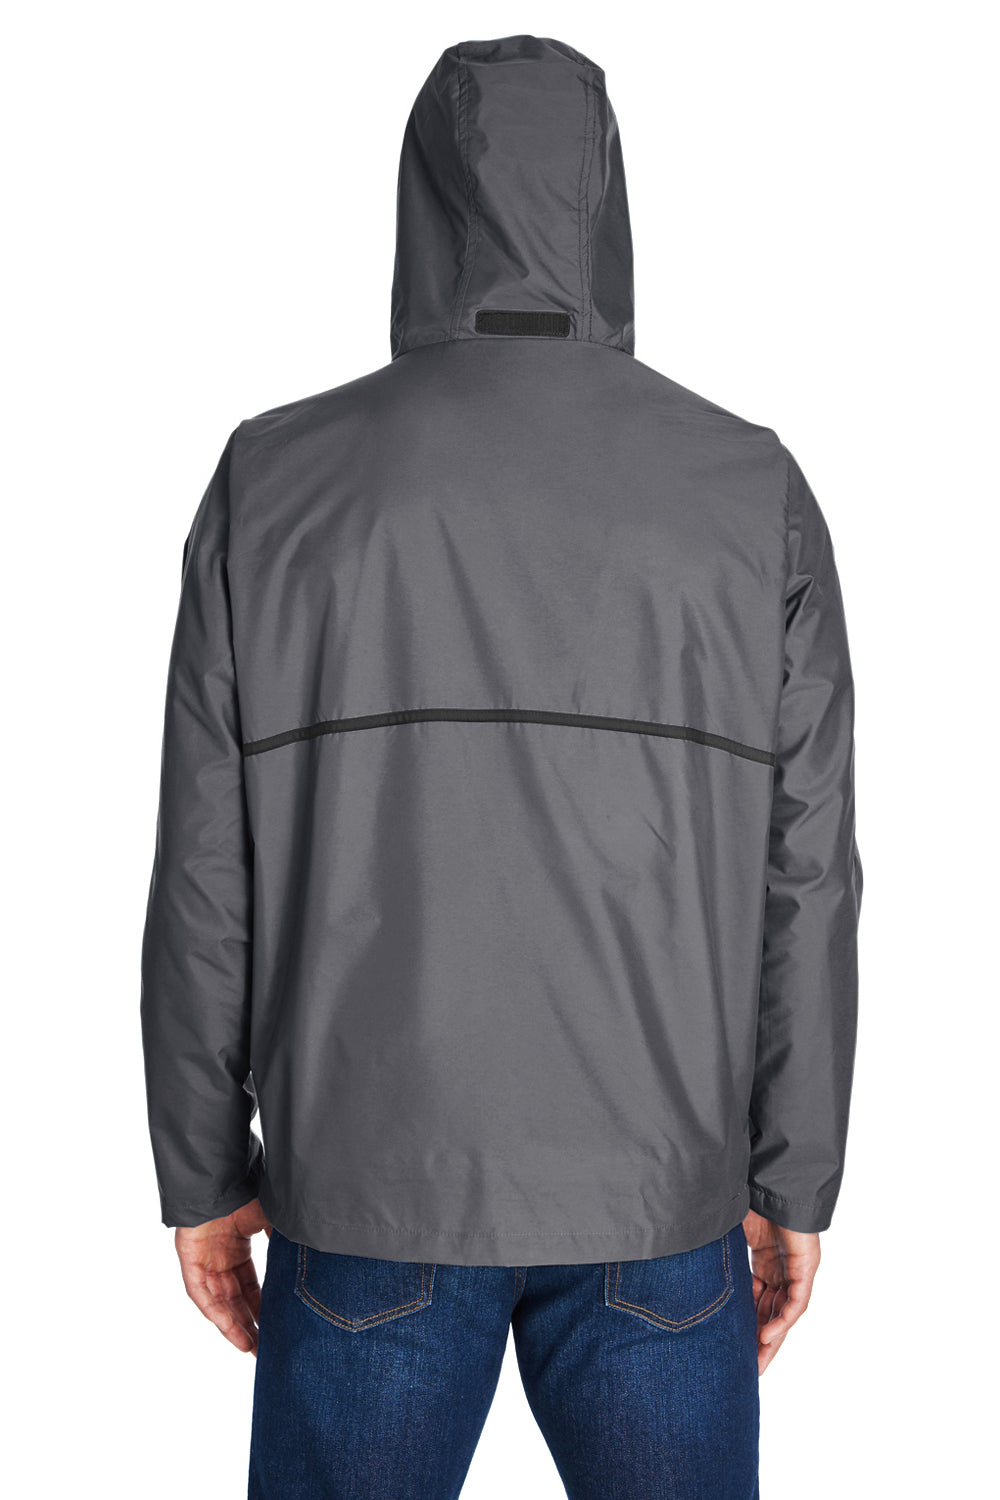 Team 365 TT70 Mens Conquest Wind & Water Resistant Full Zip Hooded Jacket Graphite Grey Back